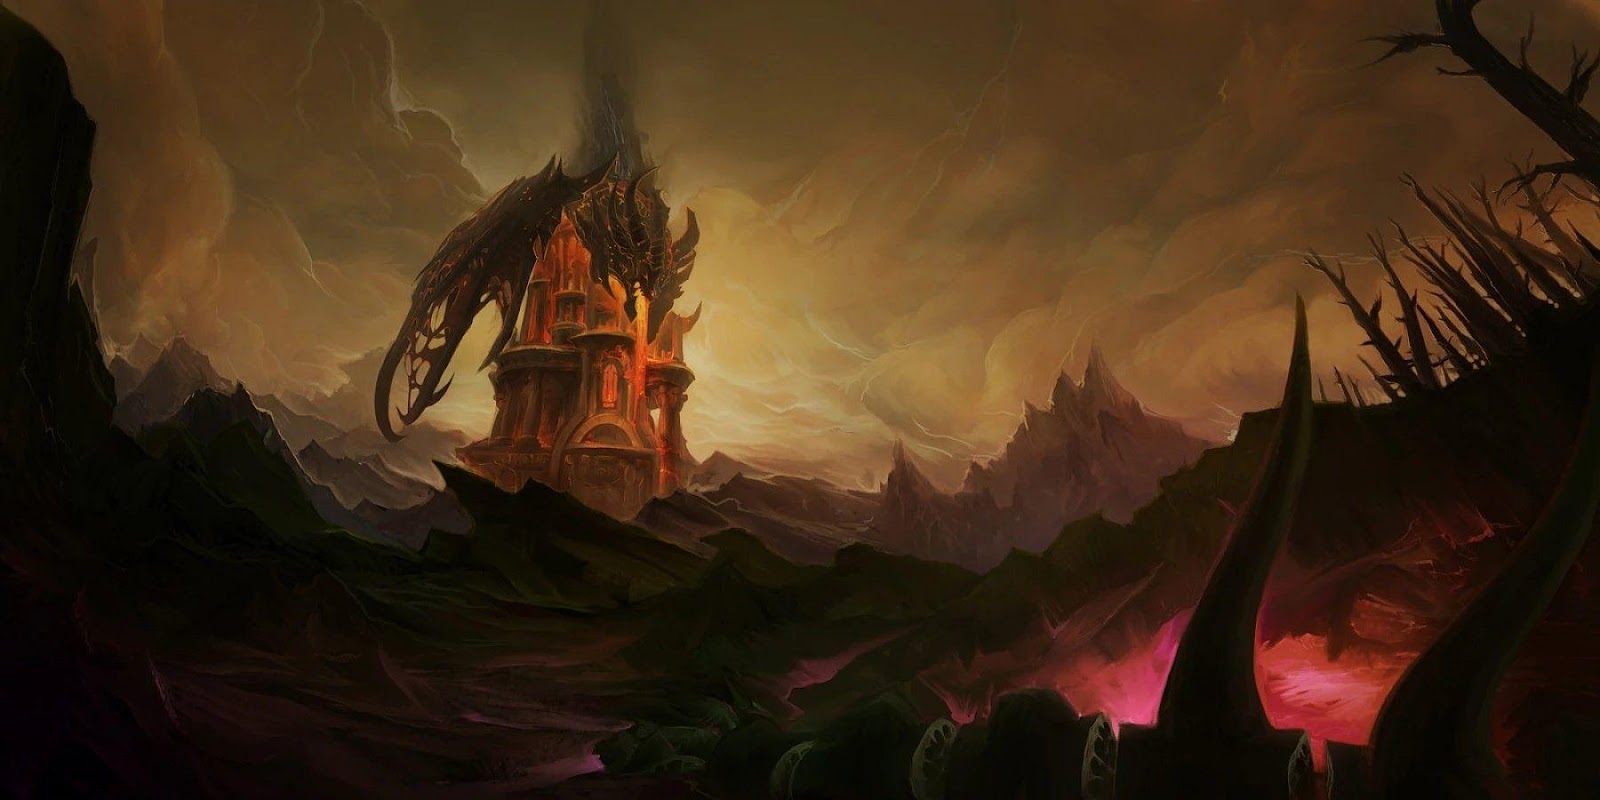 World of Warcraft Fans Recreates Iconic Cataclysm Dungeon in Minecraft